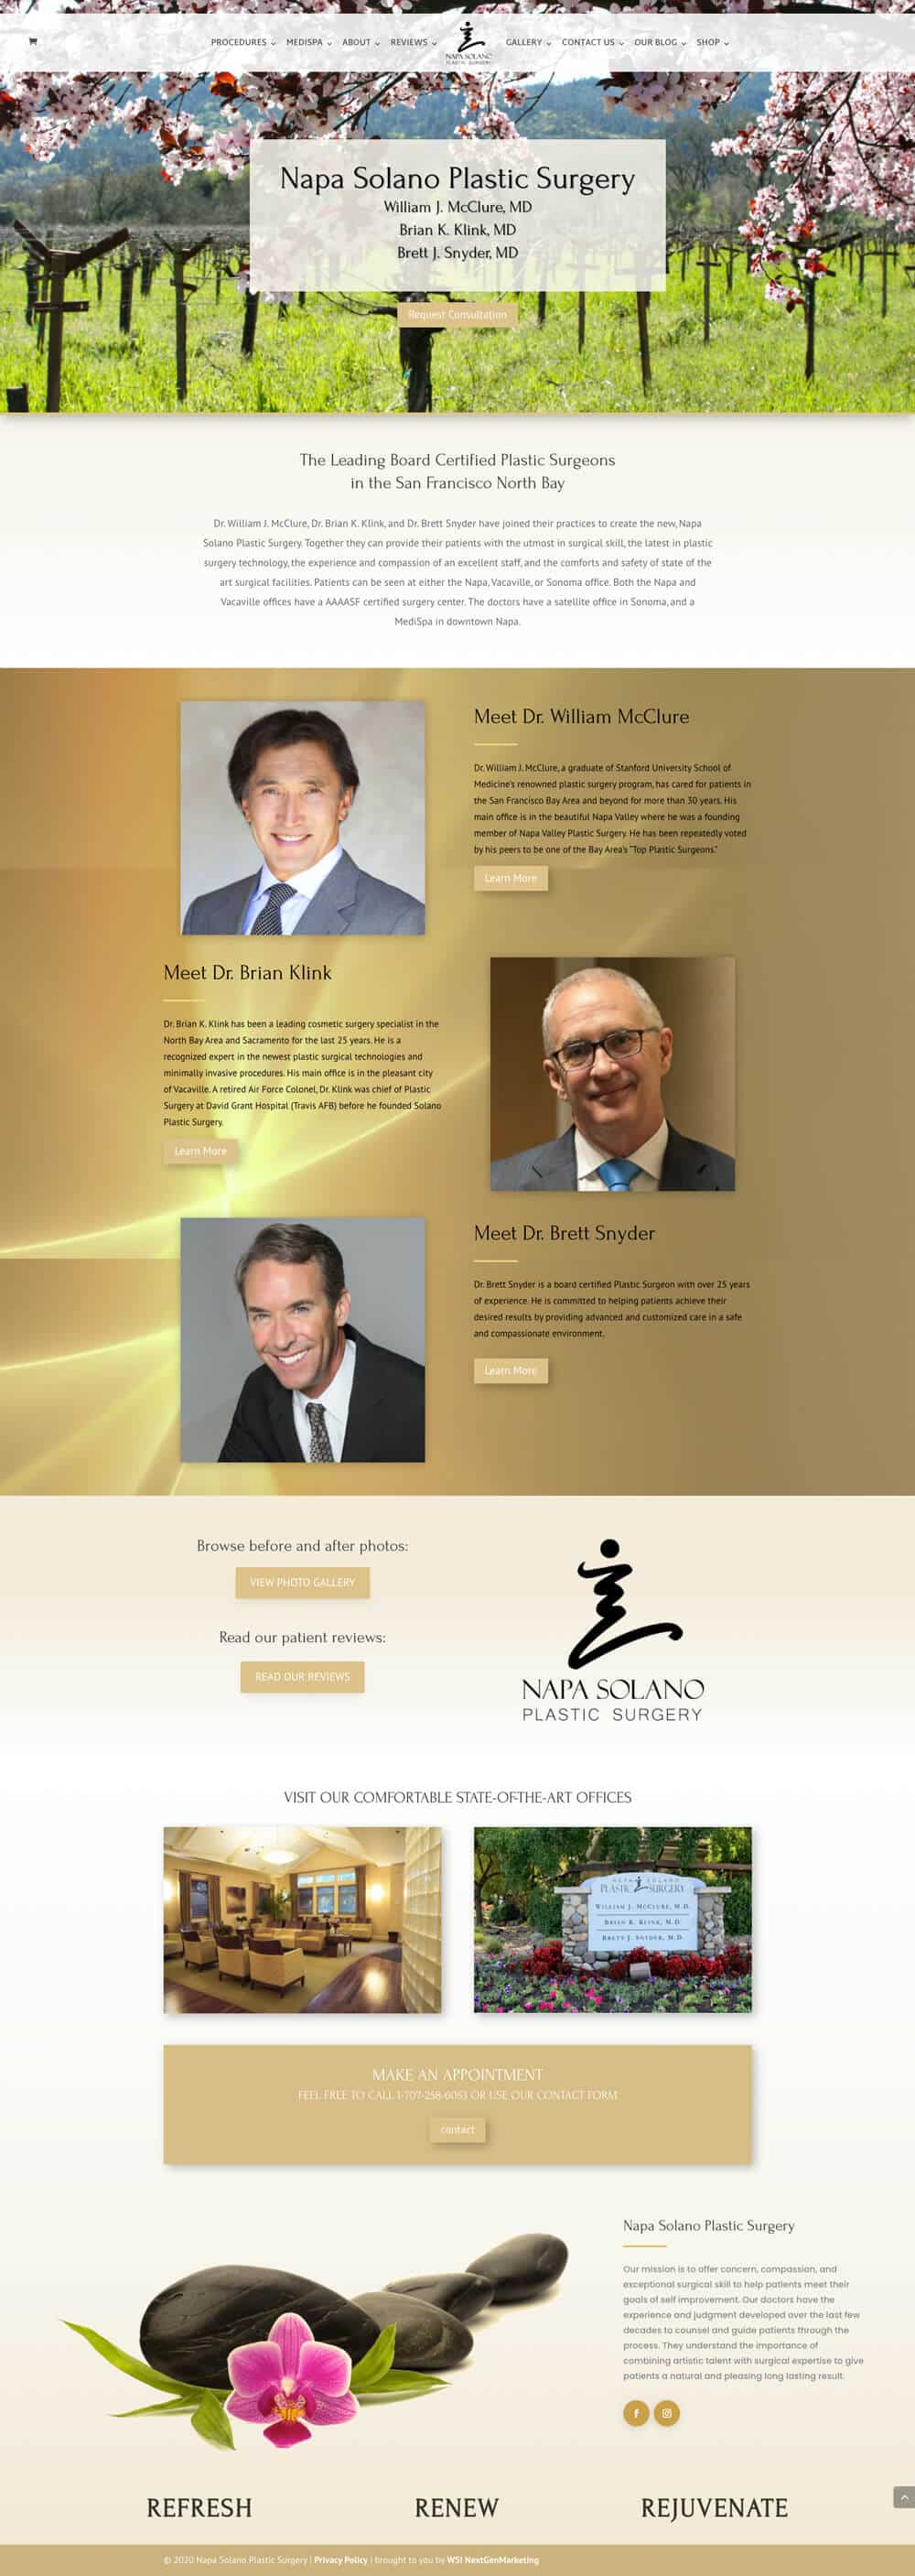 NS-plastic-surgery-website-homepage